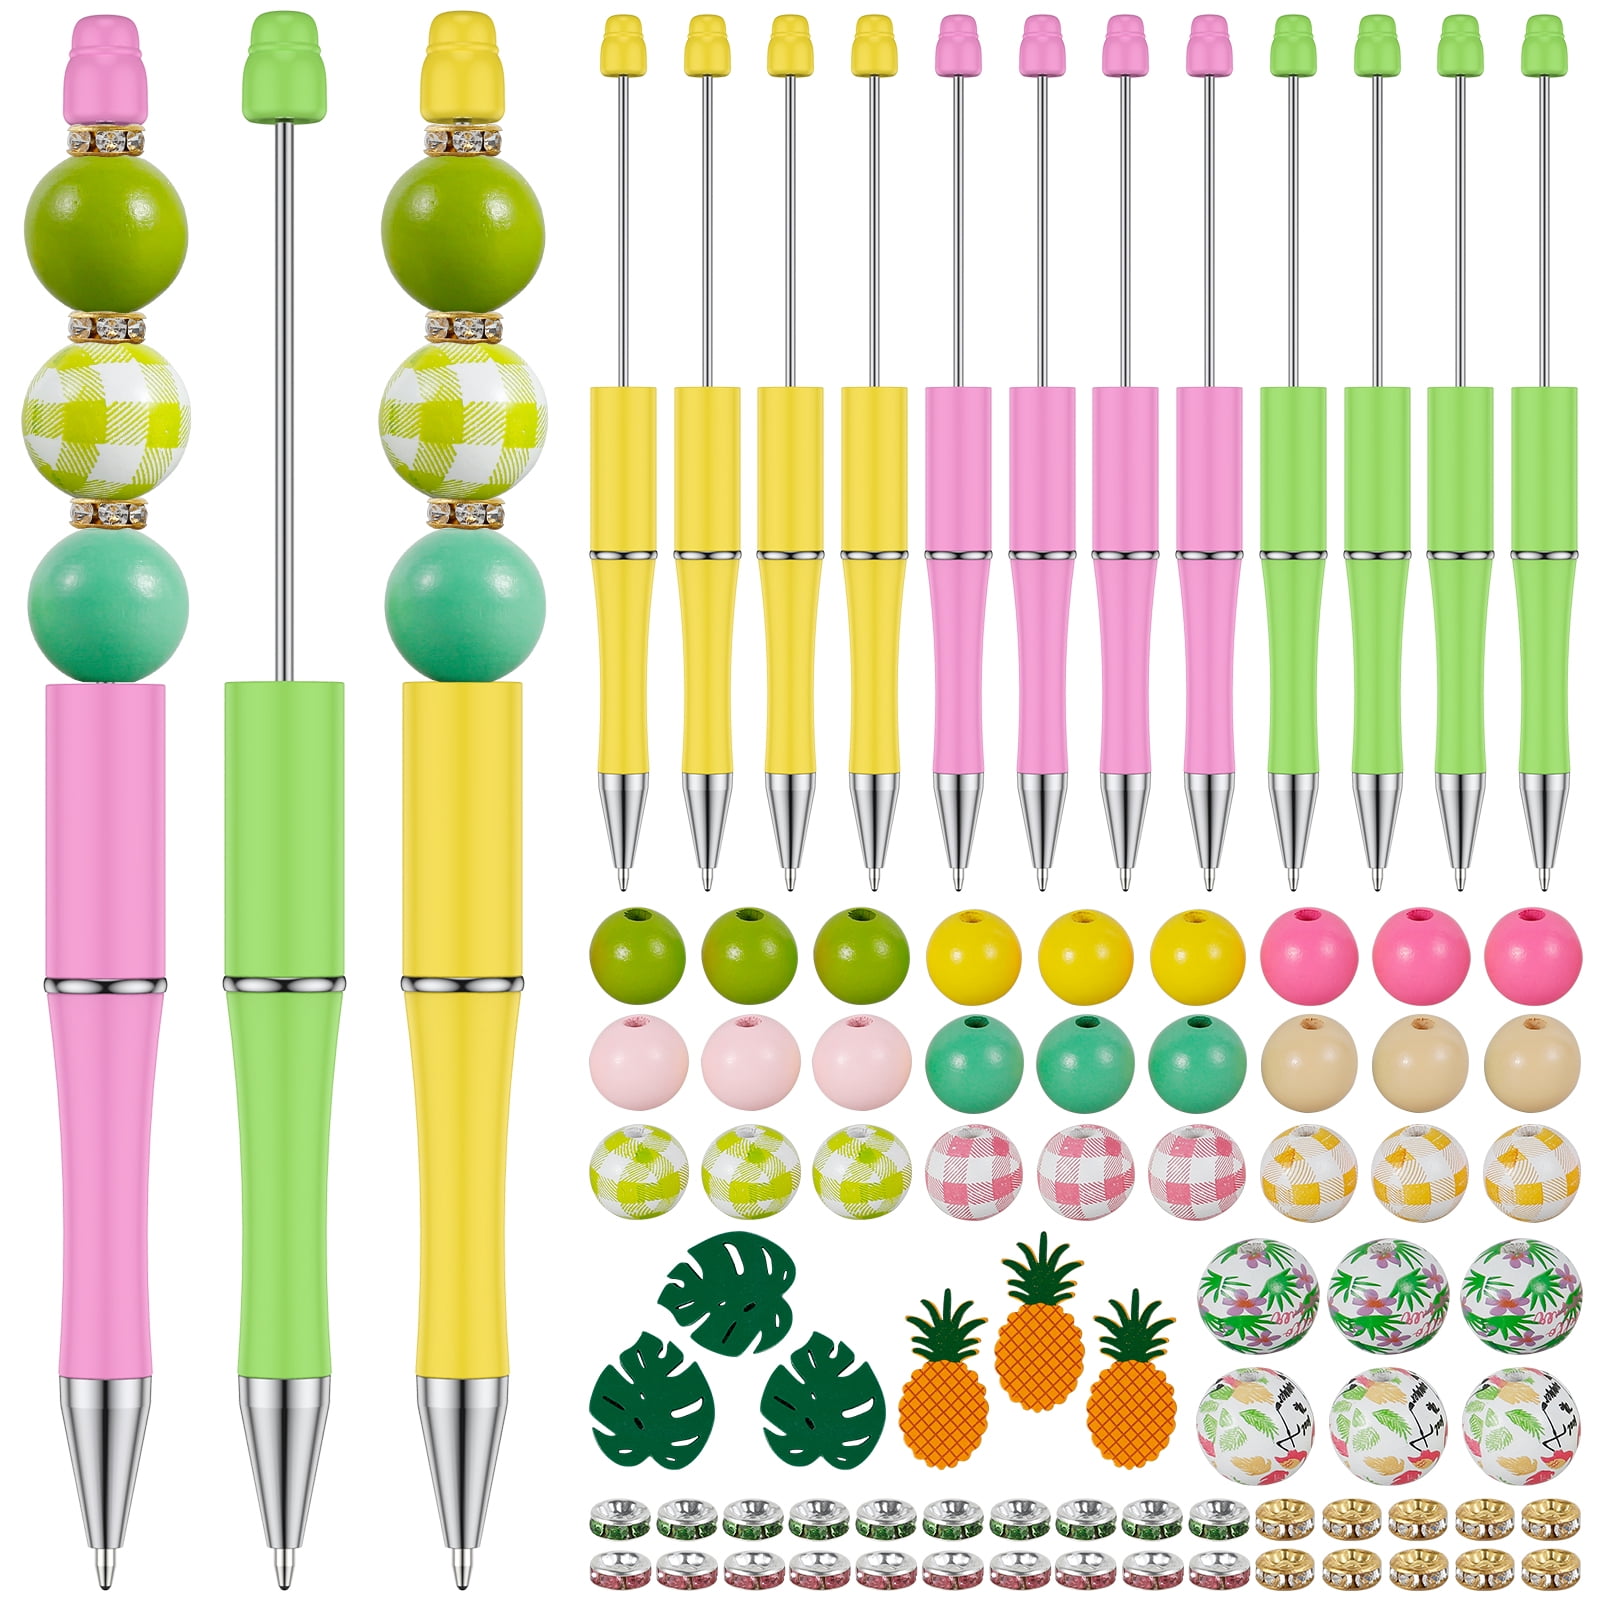 5pcs/set Beaded Ballpoint Pen With Diy Creative Design, 5 Colors